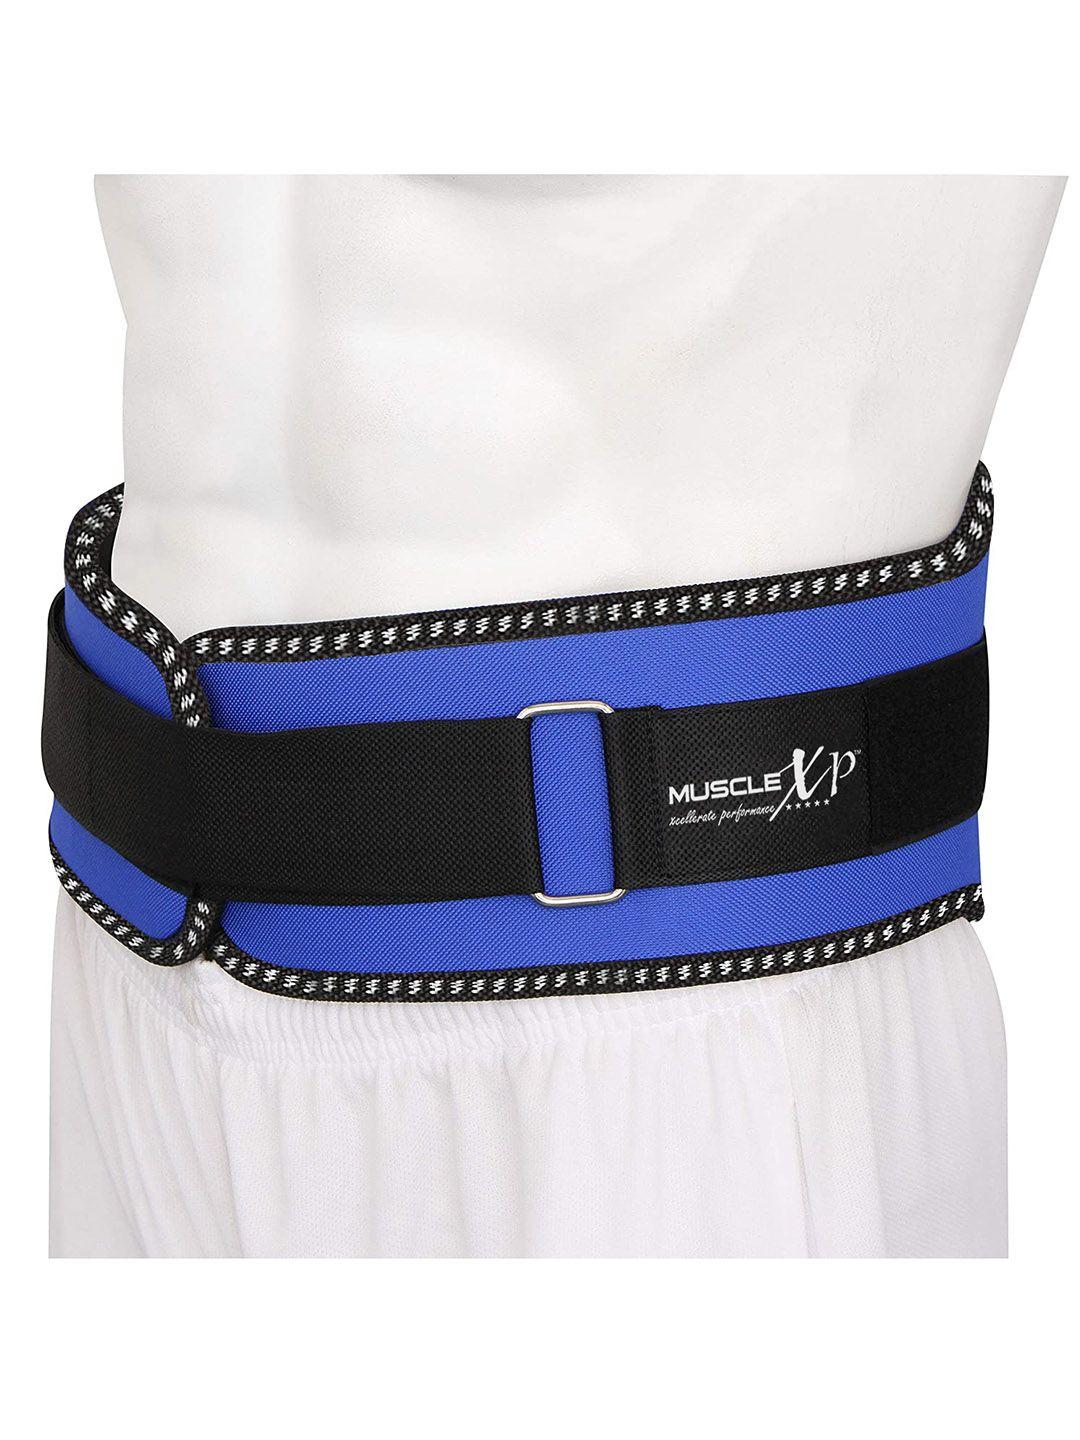 musclexp black & blue solid lumbo sacral belt